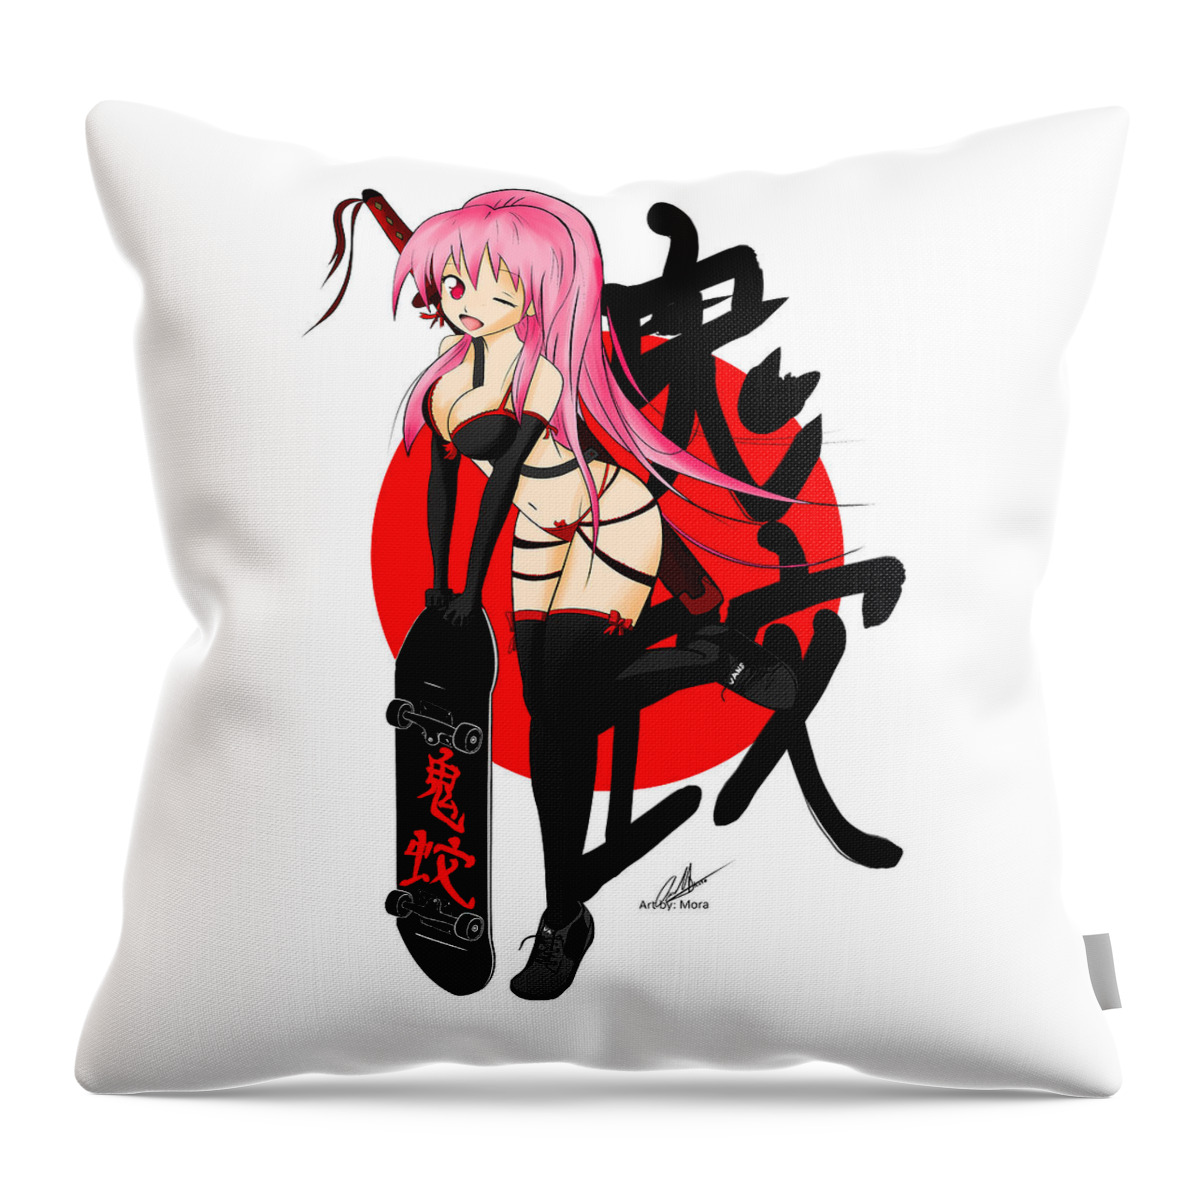 Anime Pillows For Sale